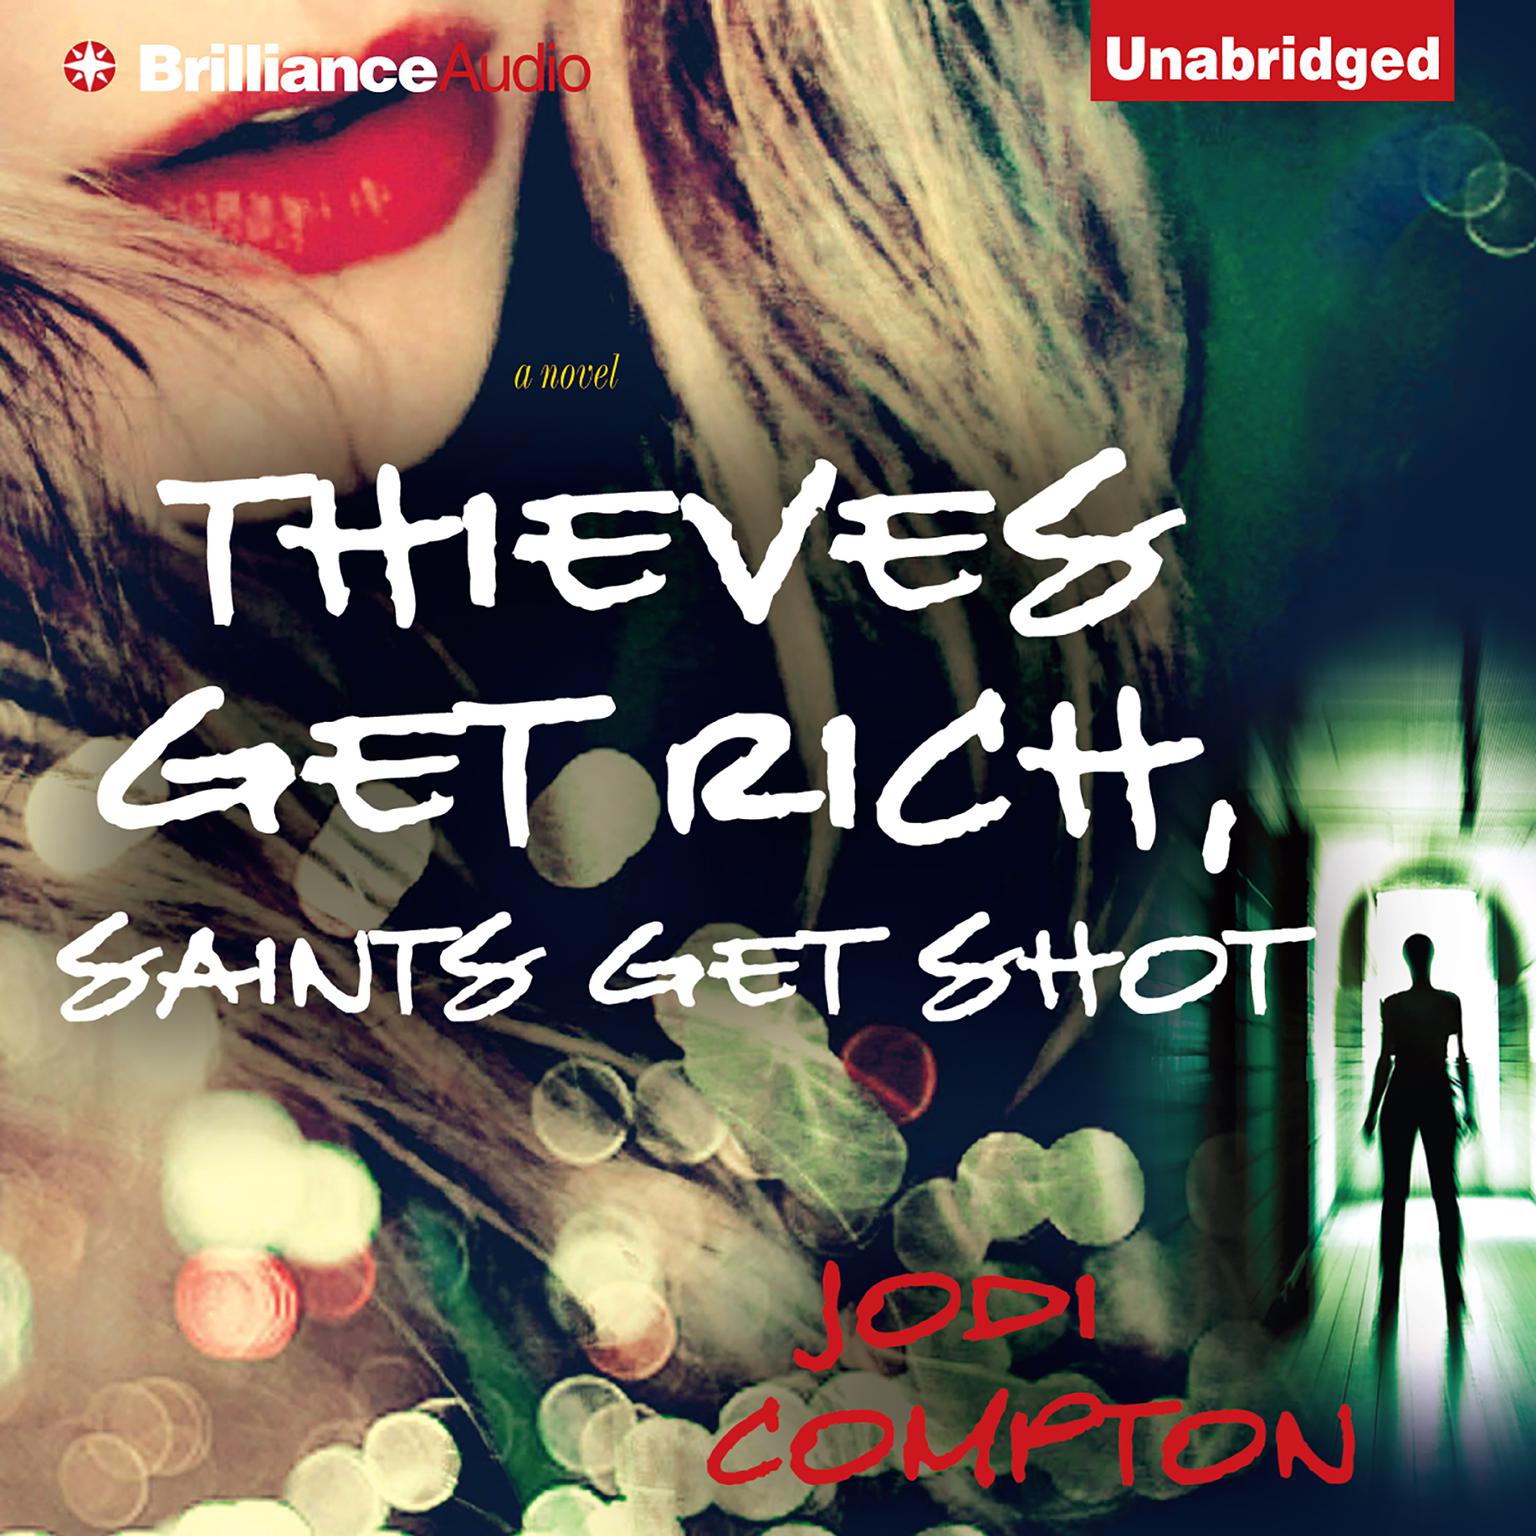 Thieves Get Rich, Saints Get Shot: A Novel Audiobook, by Jodi Compton